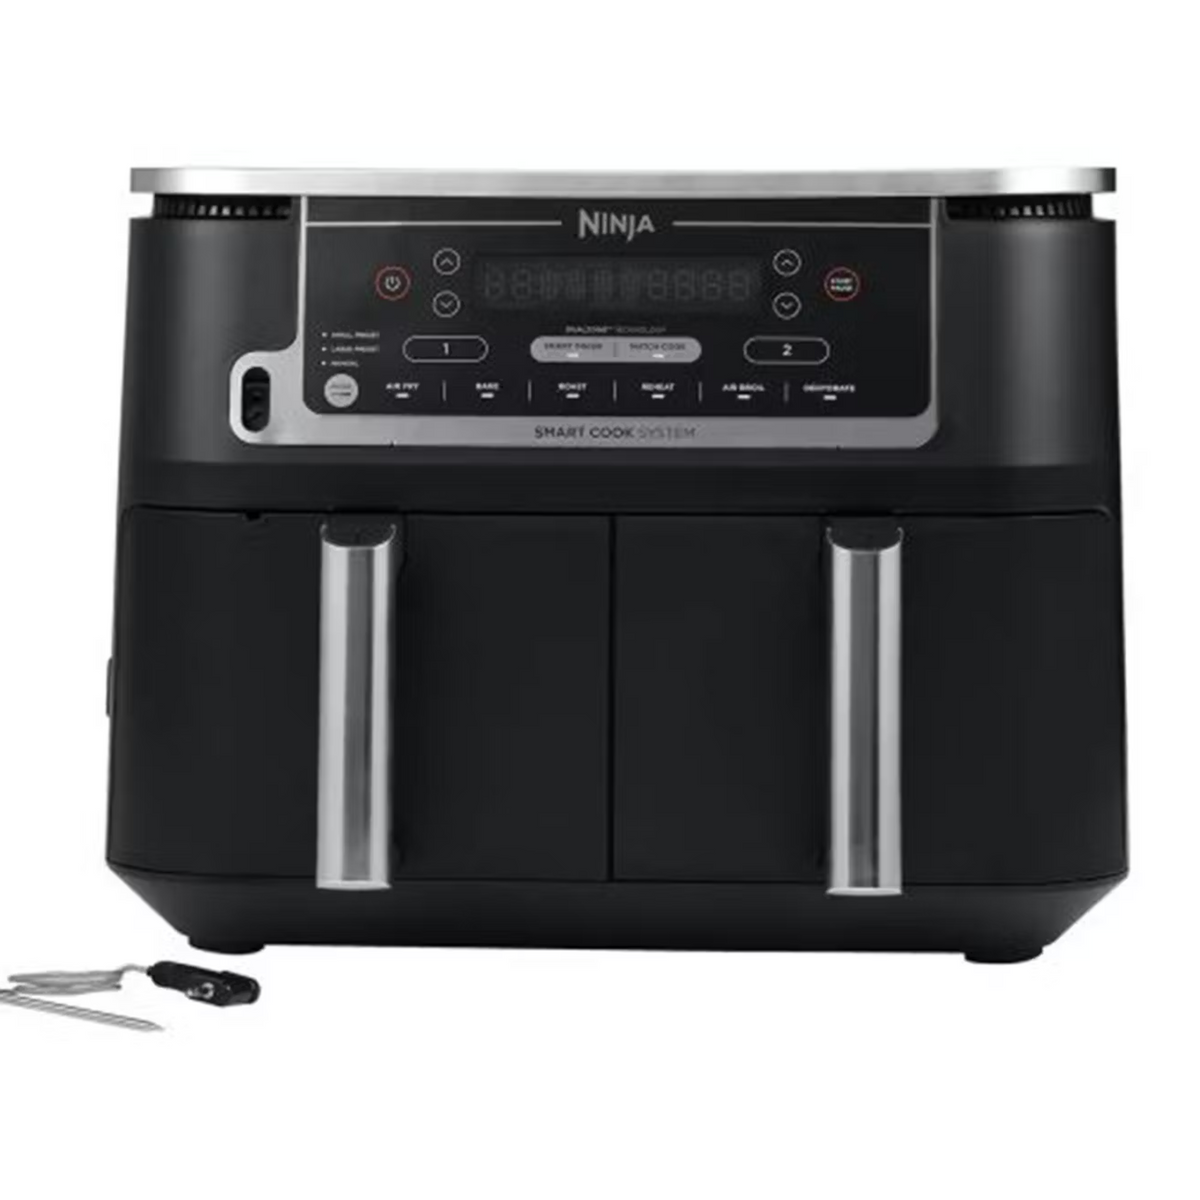 Ninja Foodi Max 2470W Dual Zone Air Fryer With Food Probe Smart Cook System- Black | AF451UK from Ninja - DID Electrical